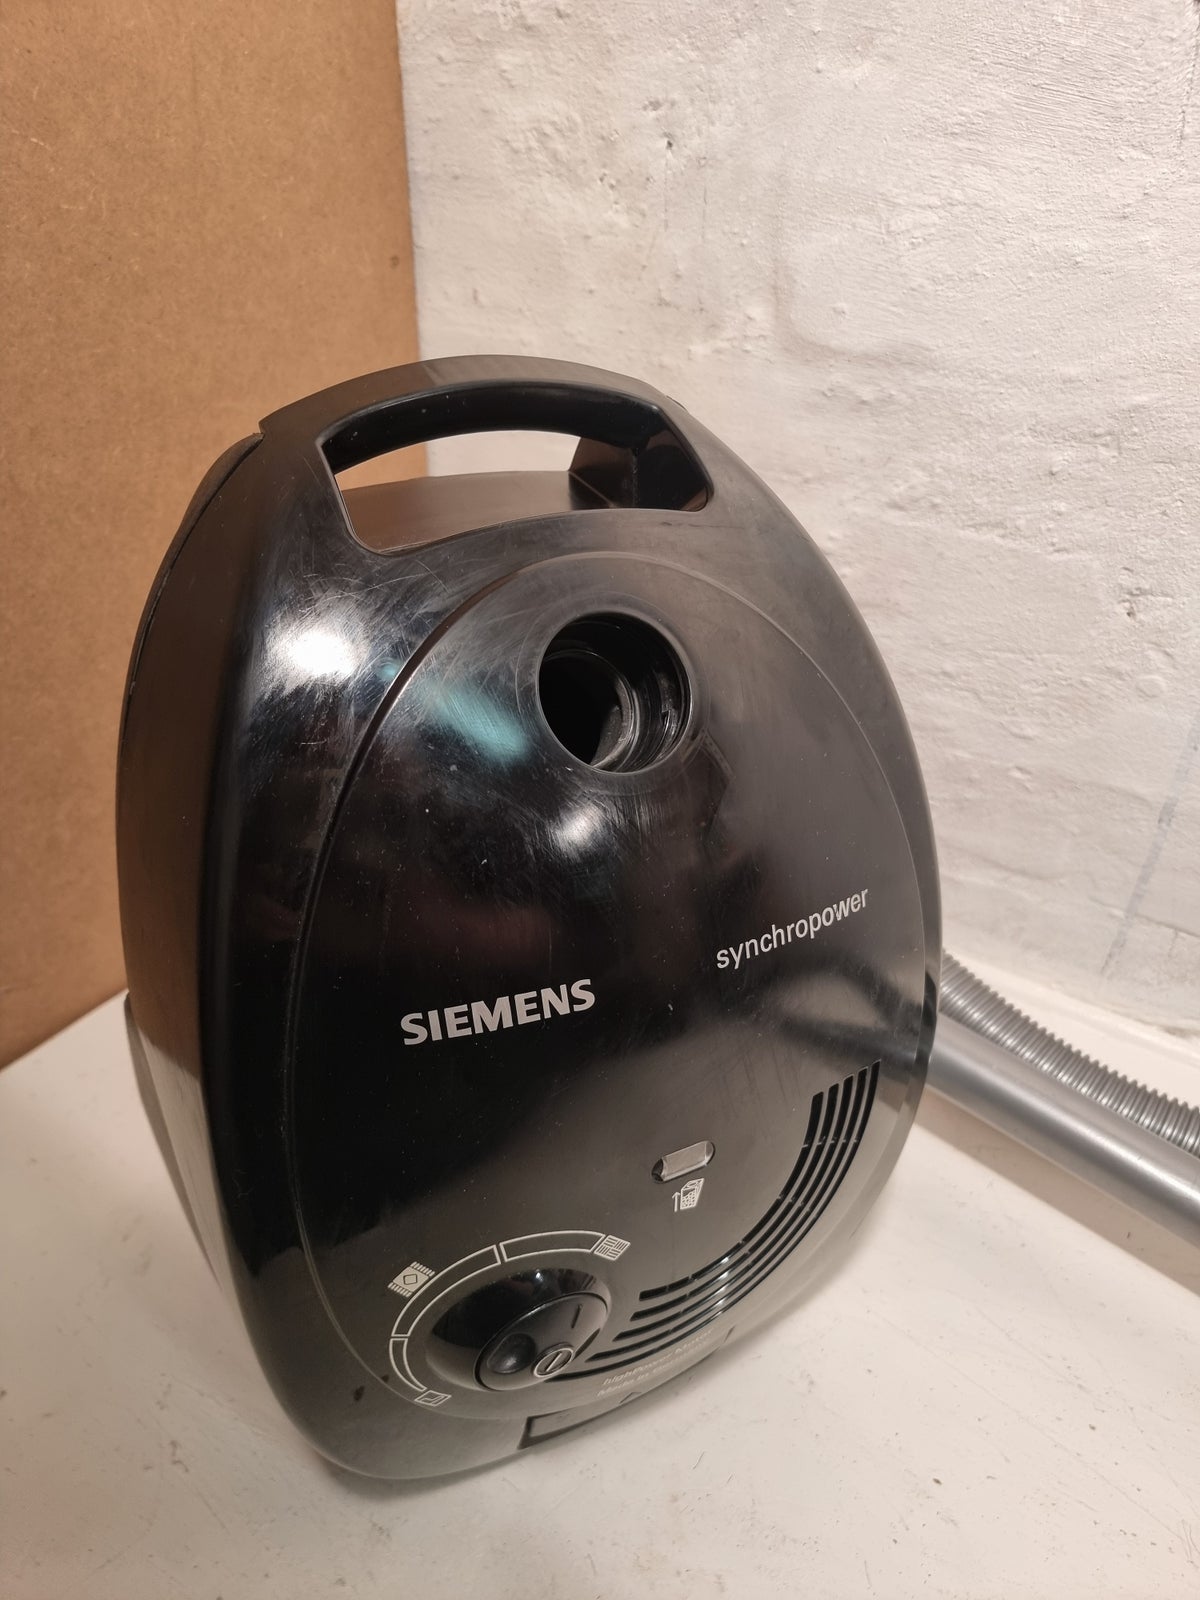 Støvsuger, Siemens, 600 watt